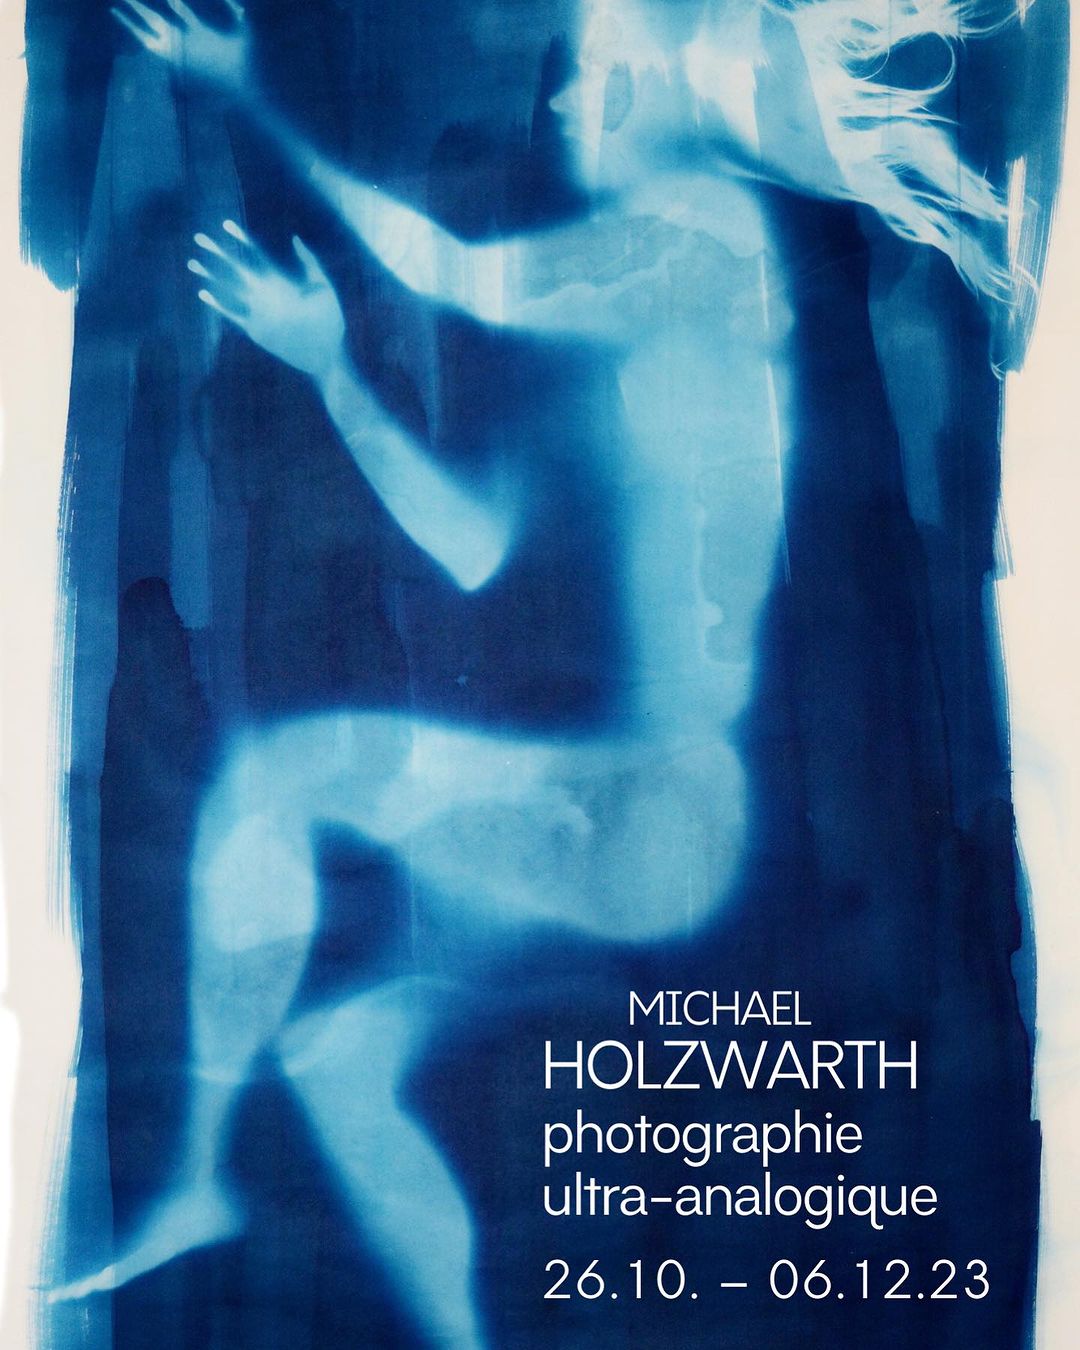 Michael Holzwarth - photographie ultra-analogique (Paris) FR